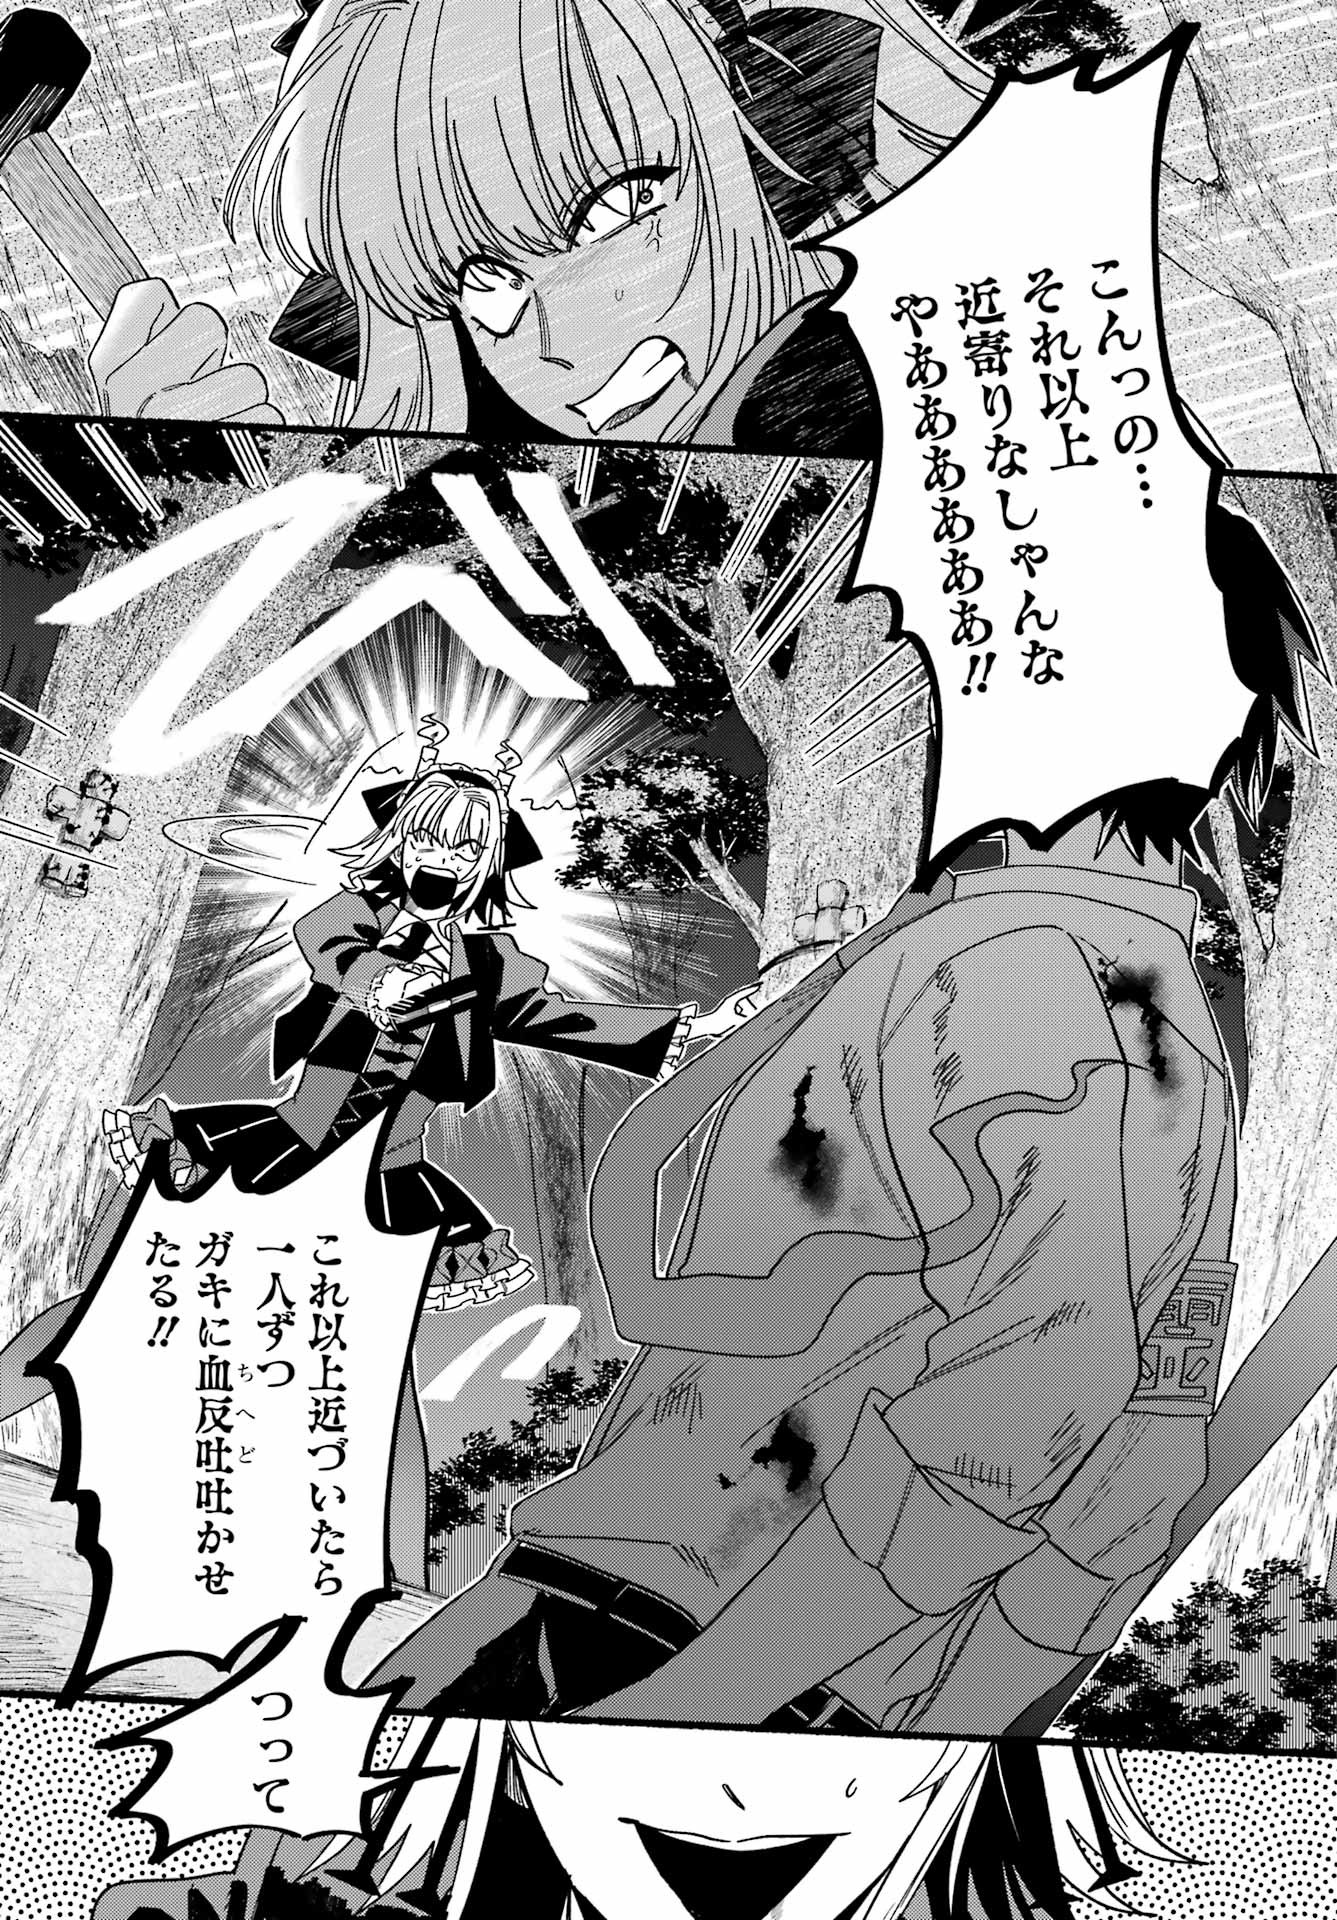 Rokurei - Tenseishi Rinne Kuyakusho Dairokkanbu Joreika Katsudouki - Chapter 12 - Page 29